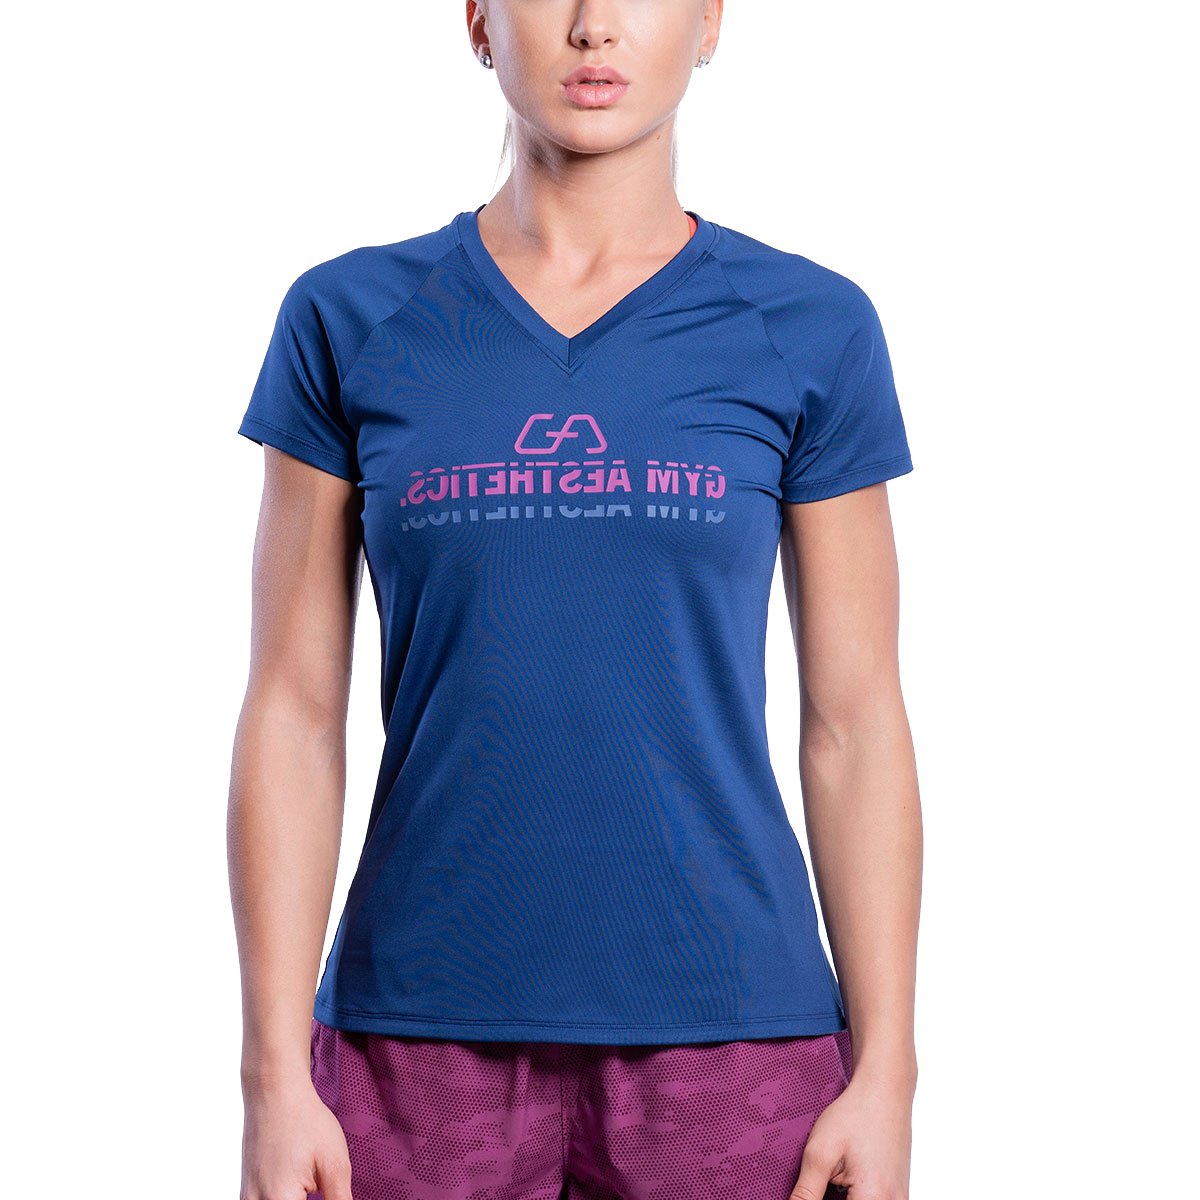 IDEOLOGY Womens New 0139 Light Blue Printed Yoga T-Shirt Active Wear Top S  B+B 